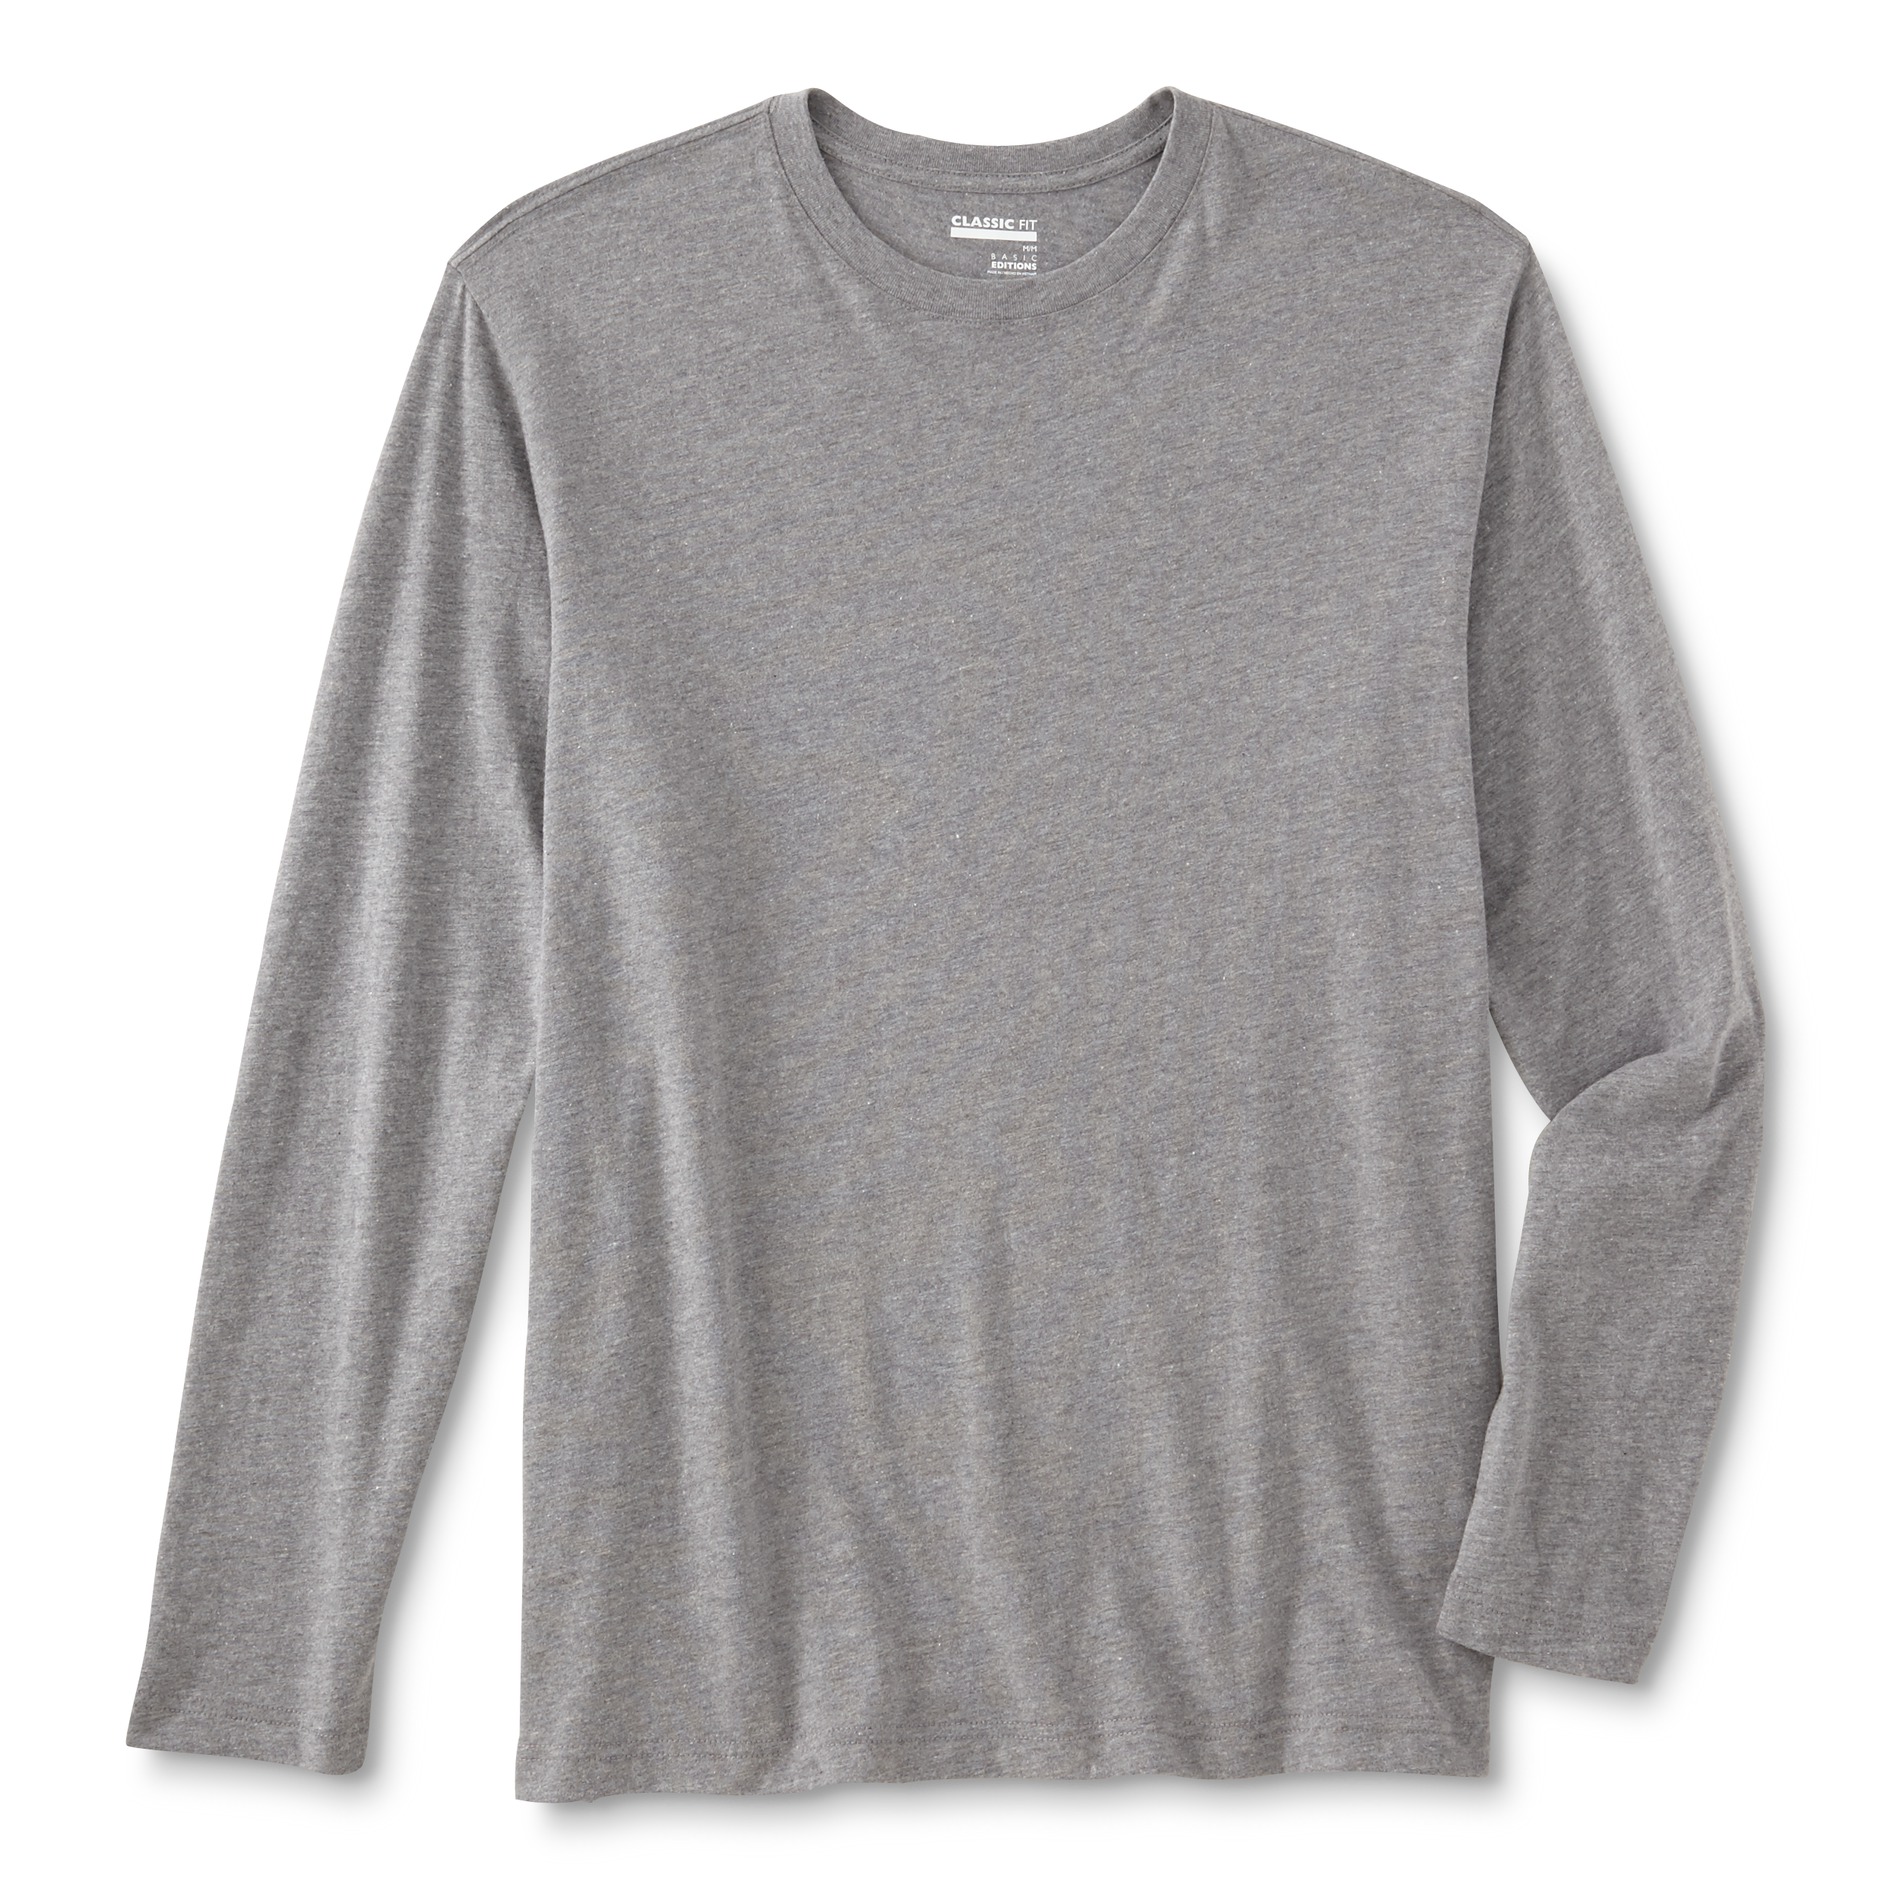 Basic Editions Men's Long-Sleeve T-Shirt